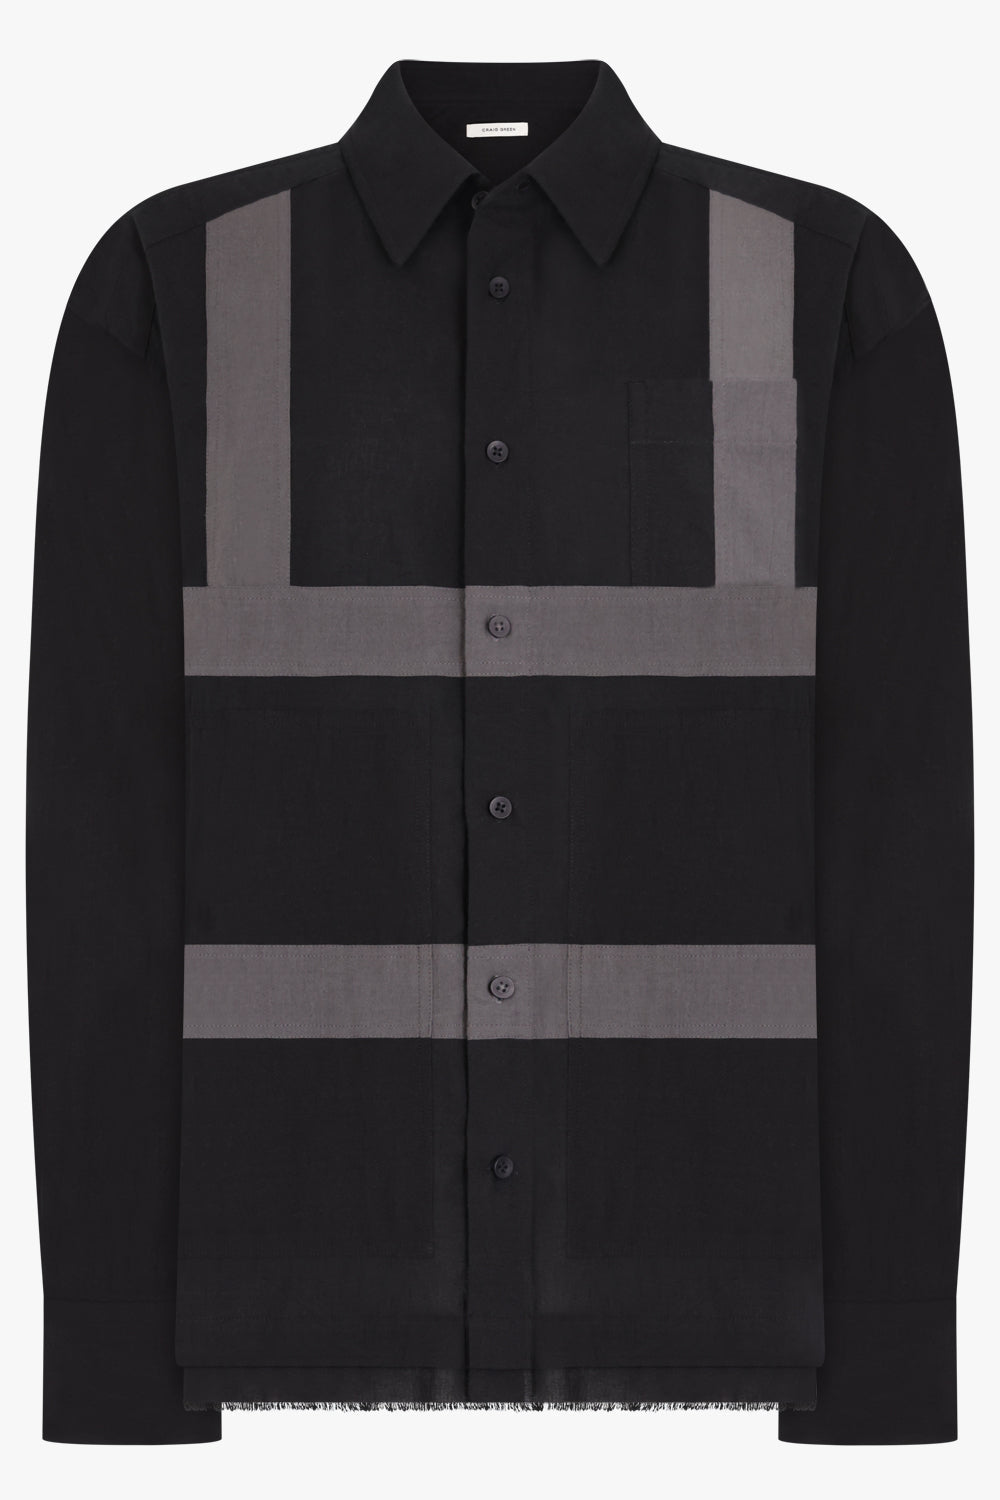 CRAIG GREEN RTW Harness Shirt | Black/Dark Grey